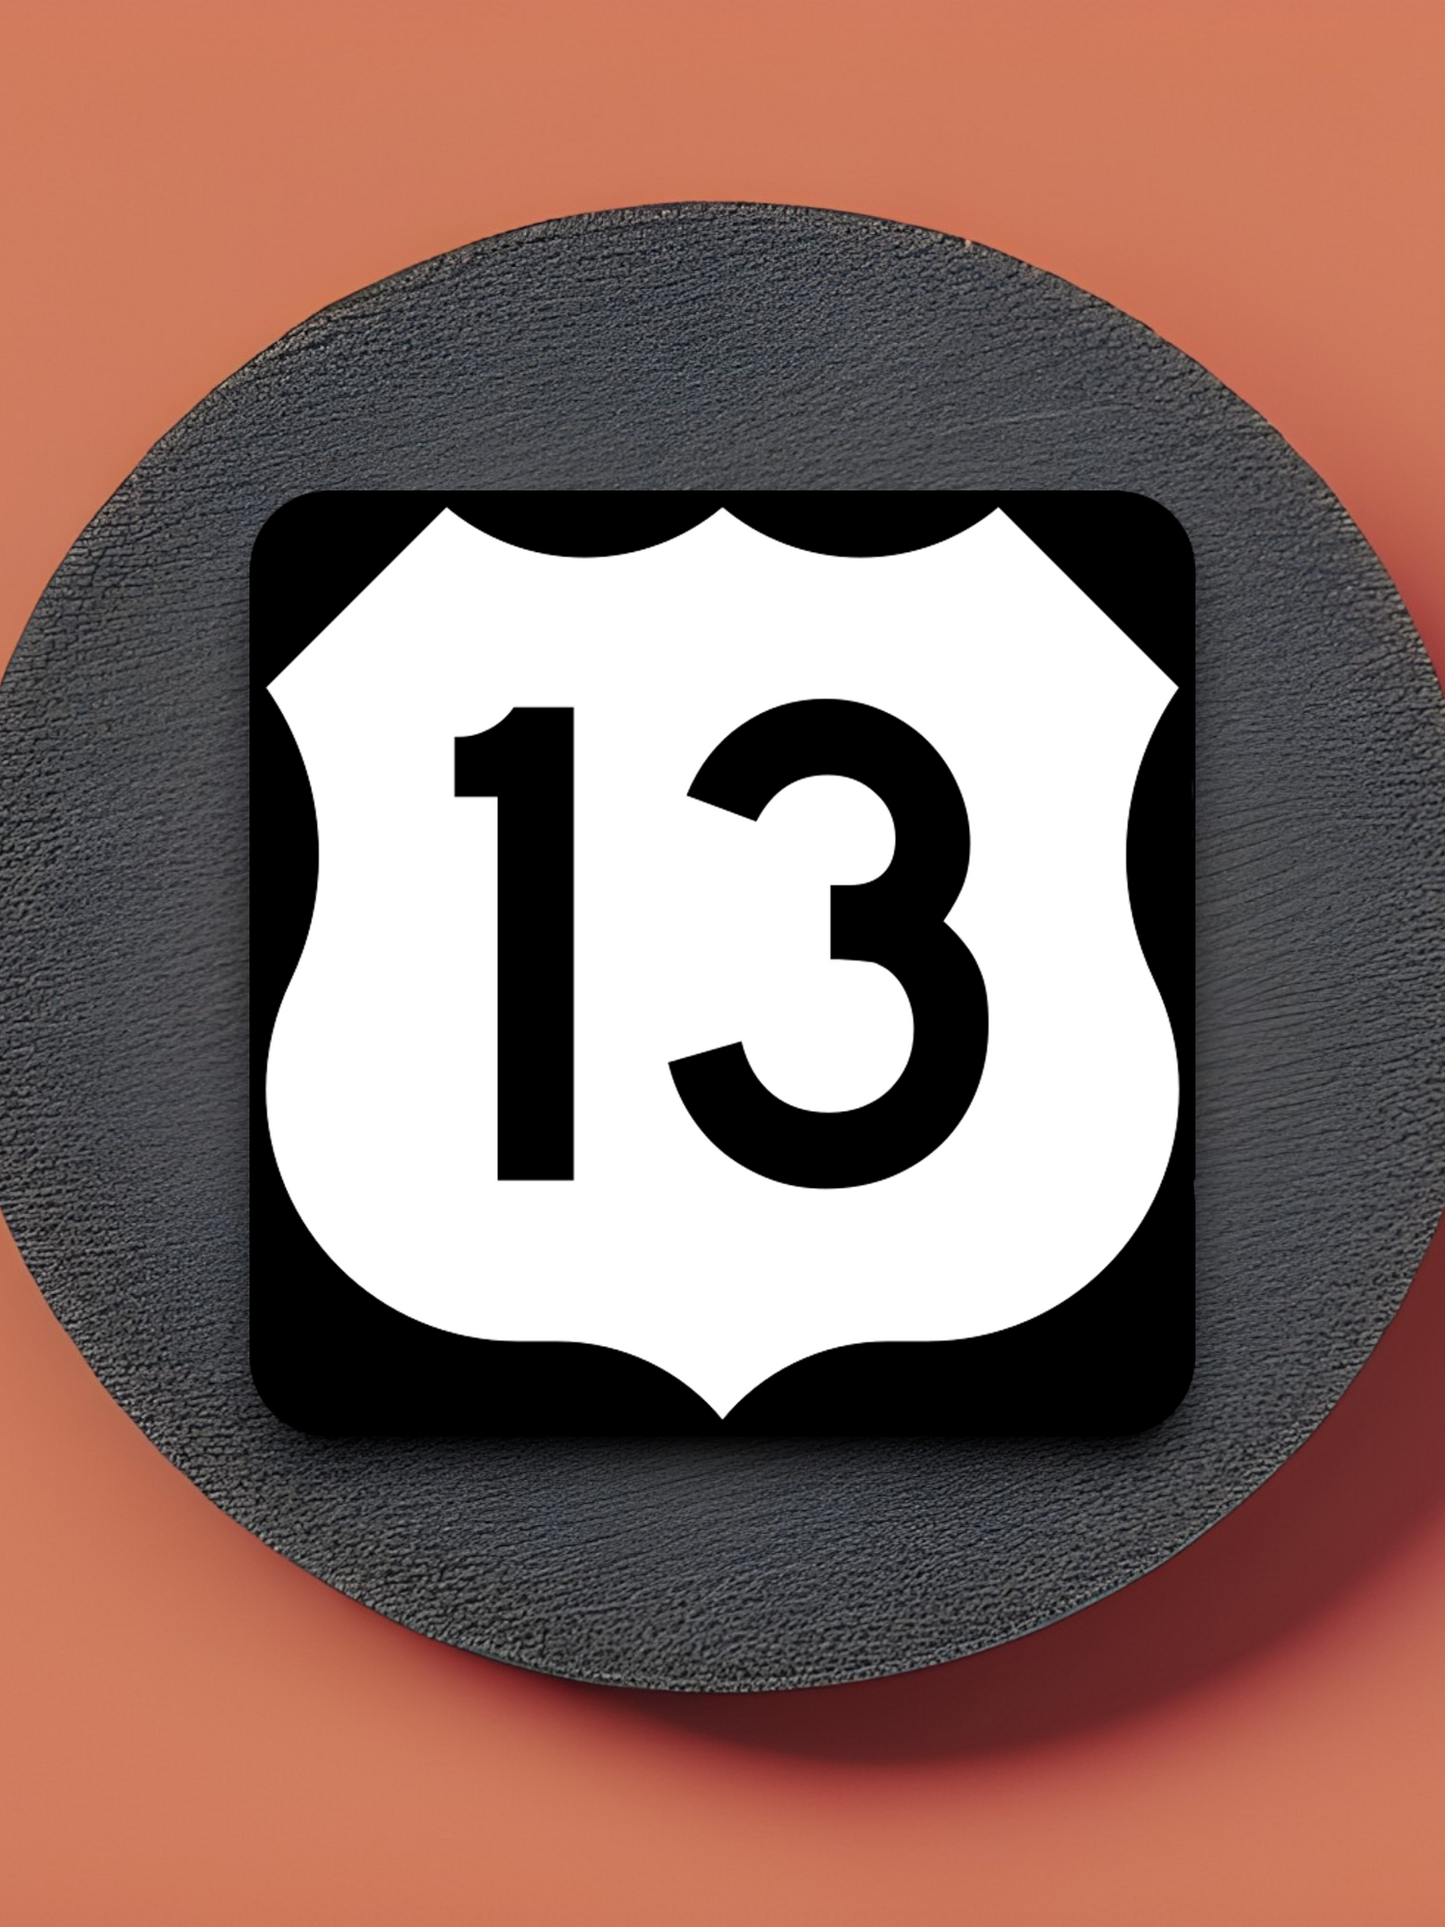 U.S. Route 13 Road Sign Sticker